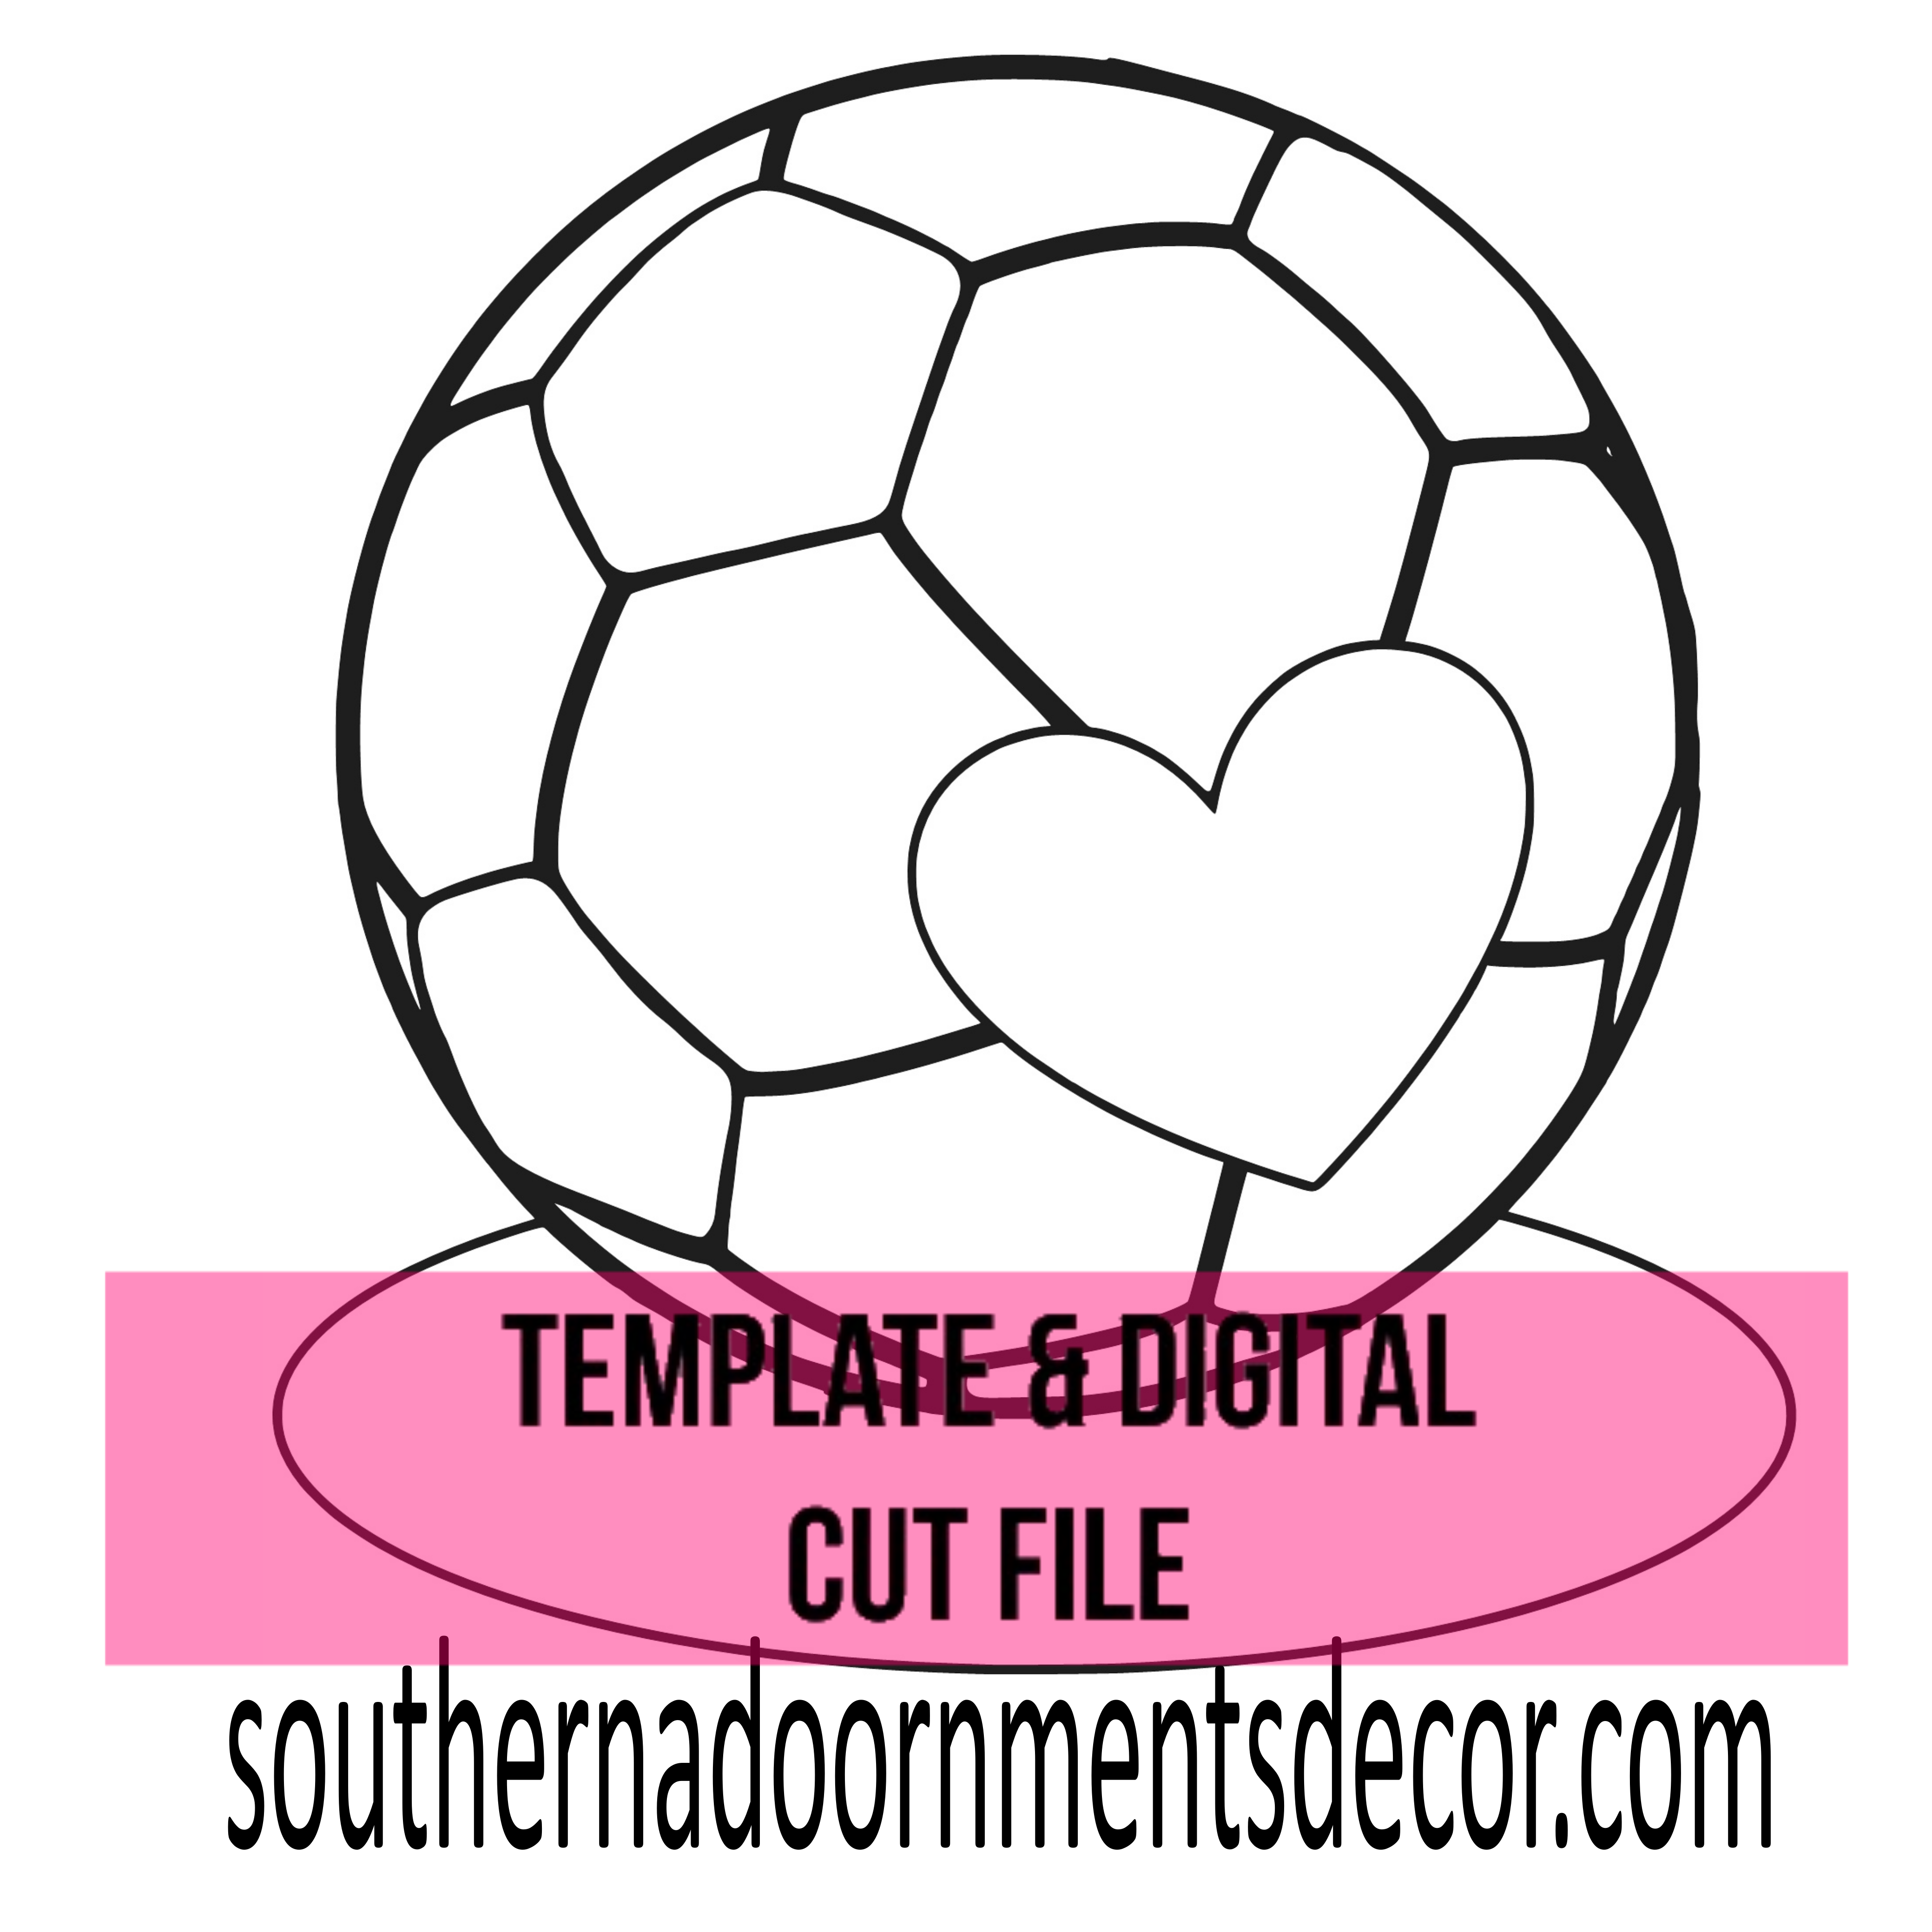 Soccer Ball Template & Digital Cut File